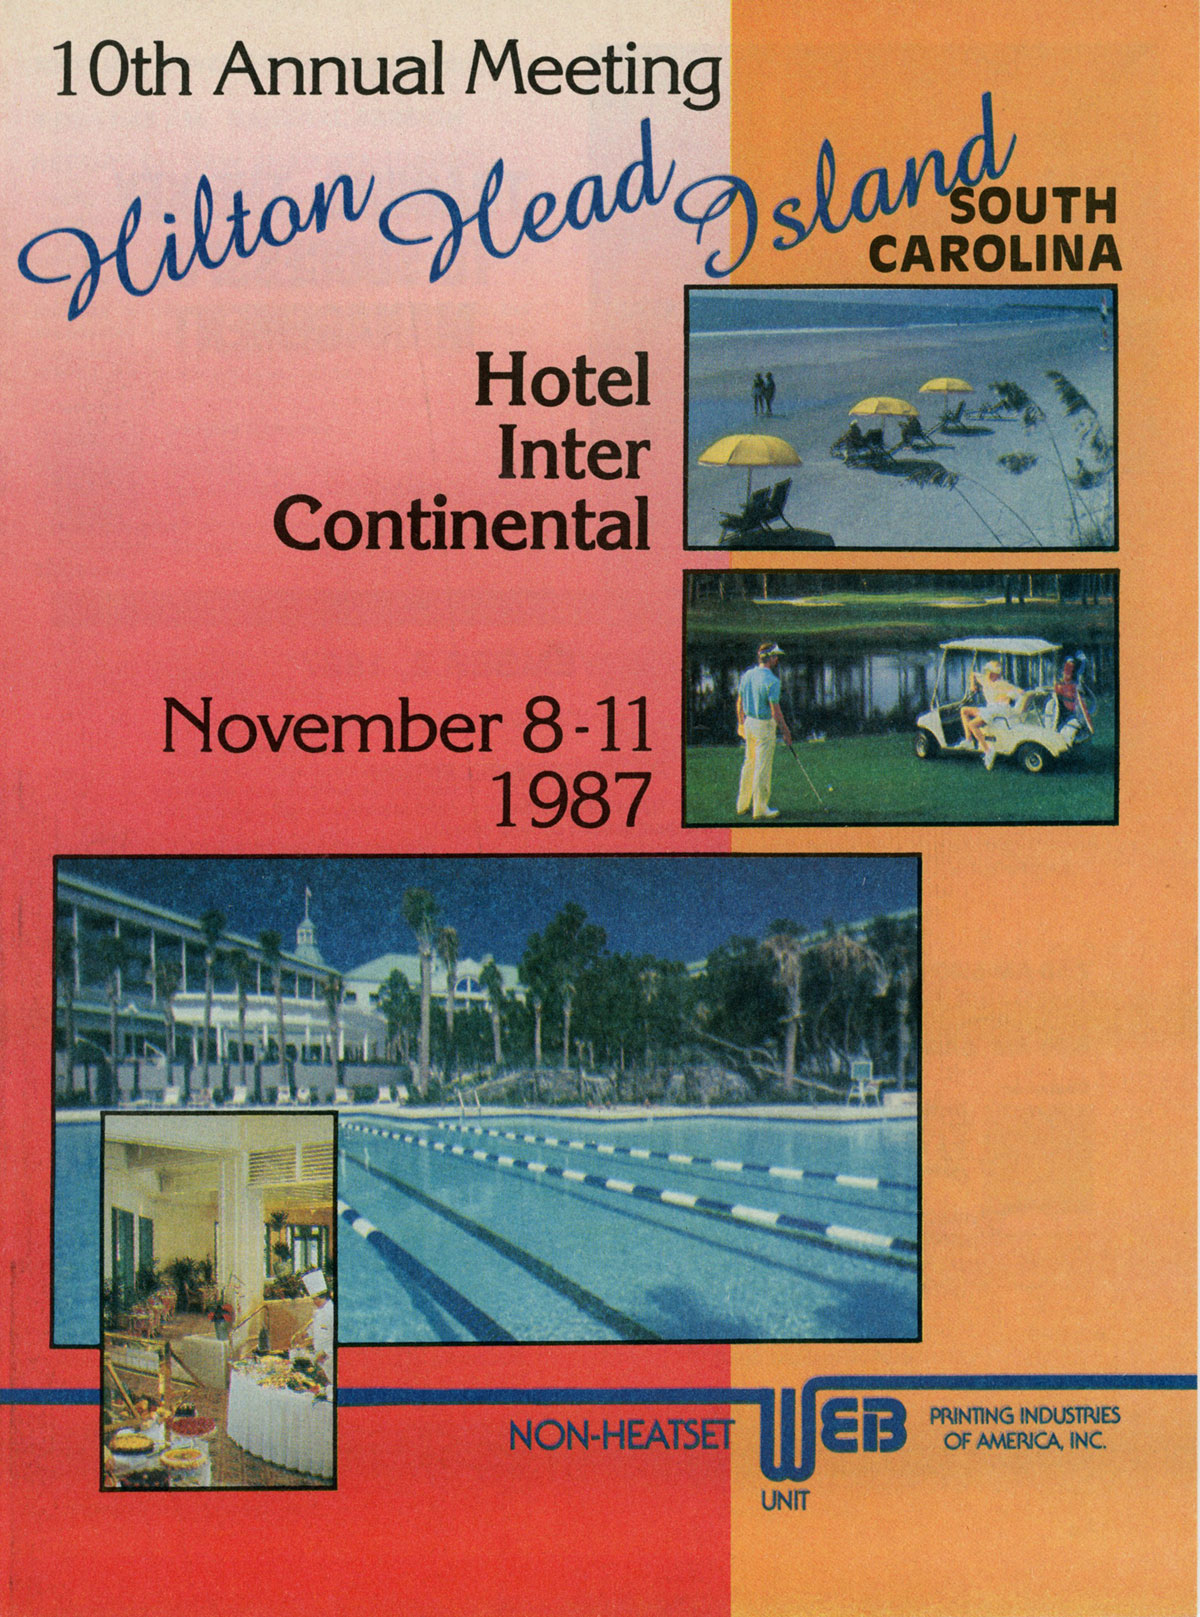 10th Annual Meeting Hilton Head Island South Carolina Hotel Inter Continental November 8-11 1987